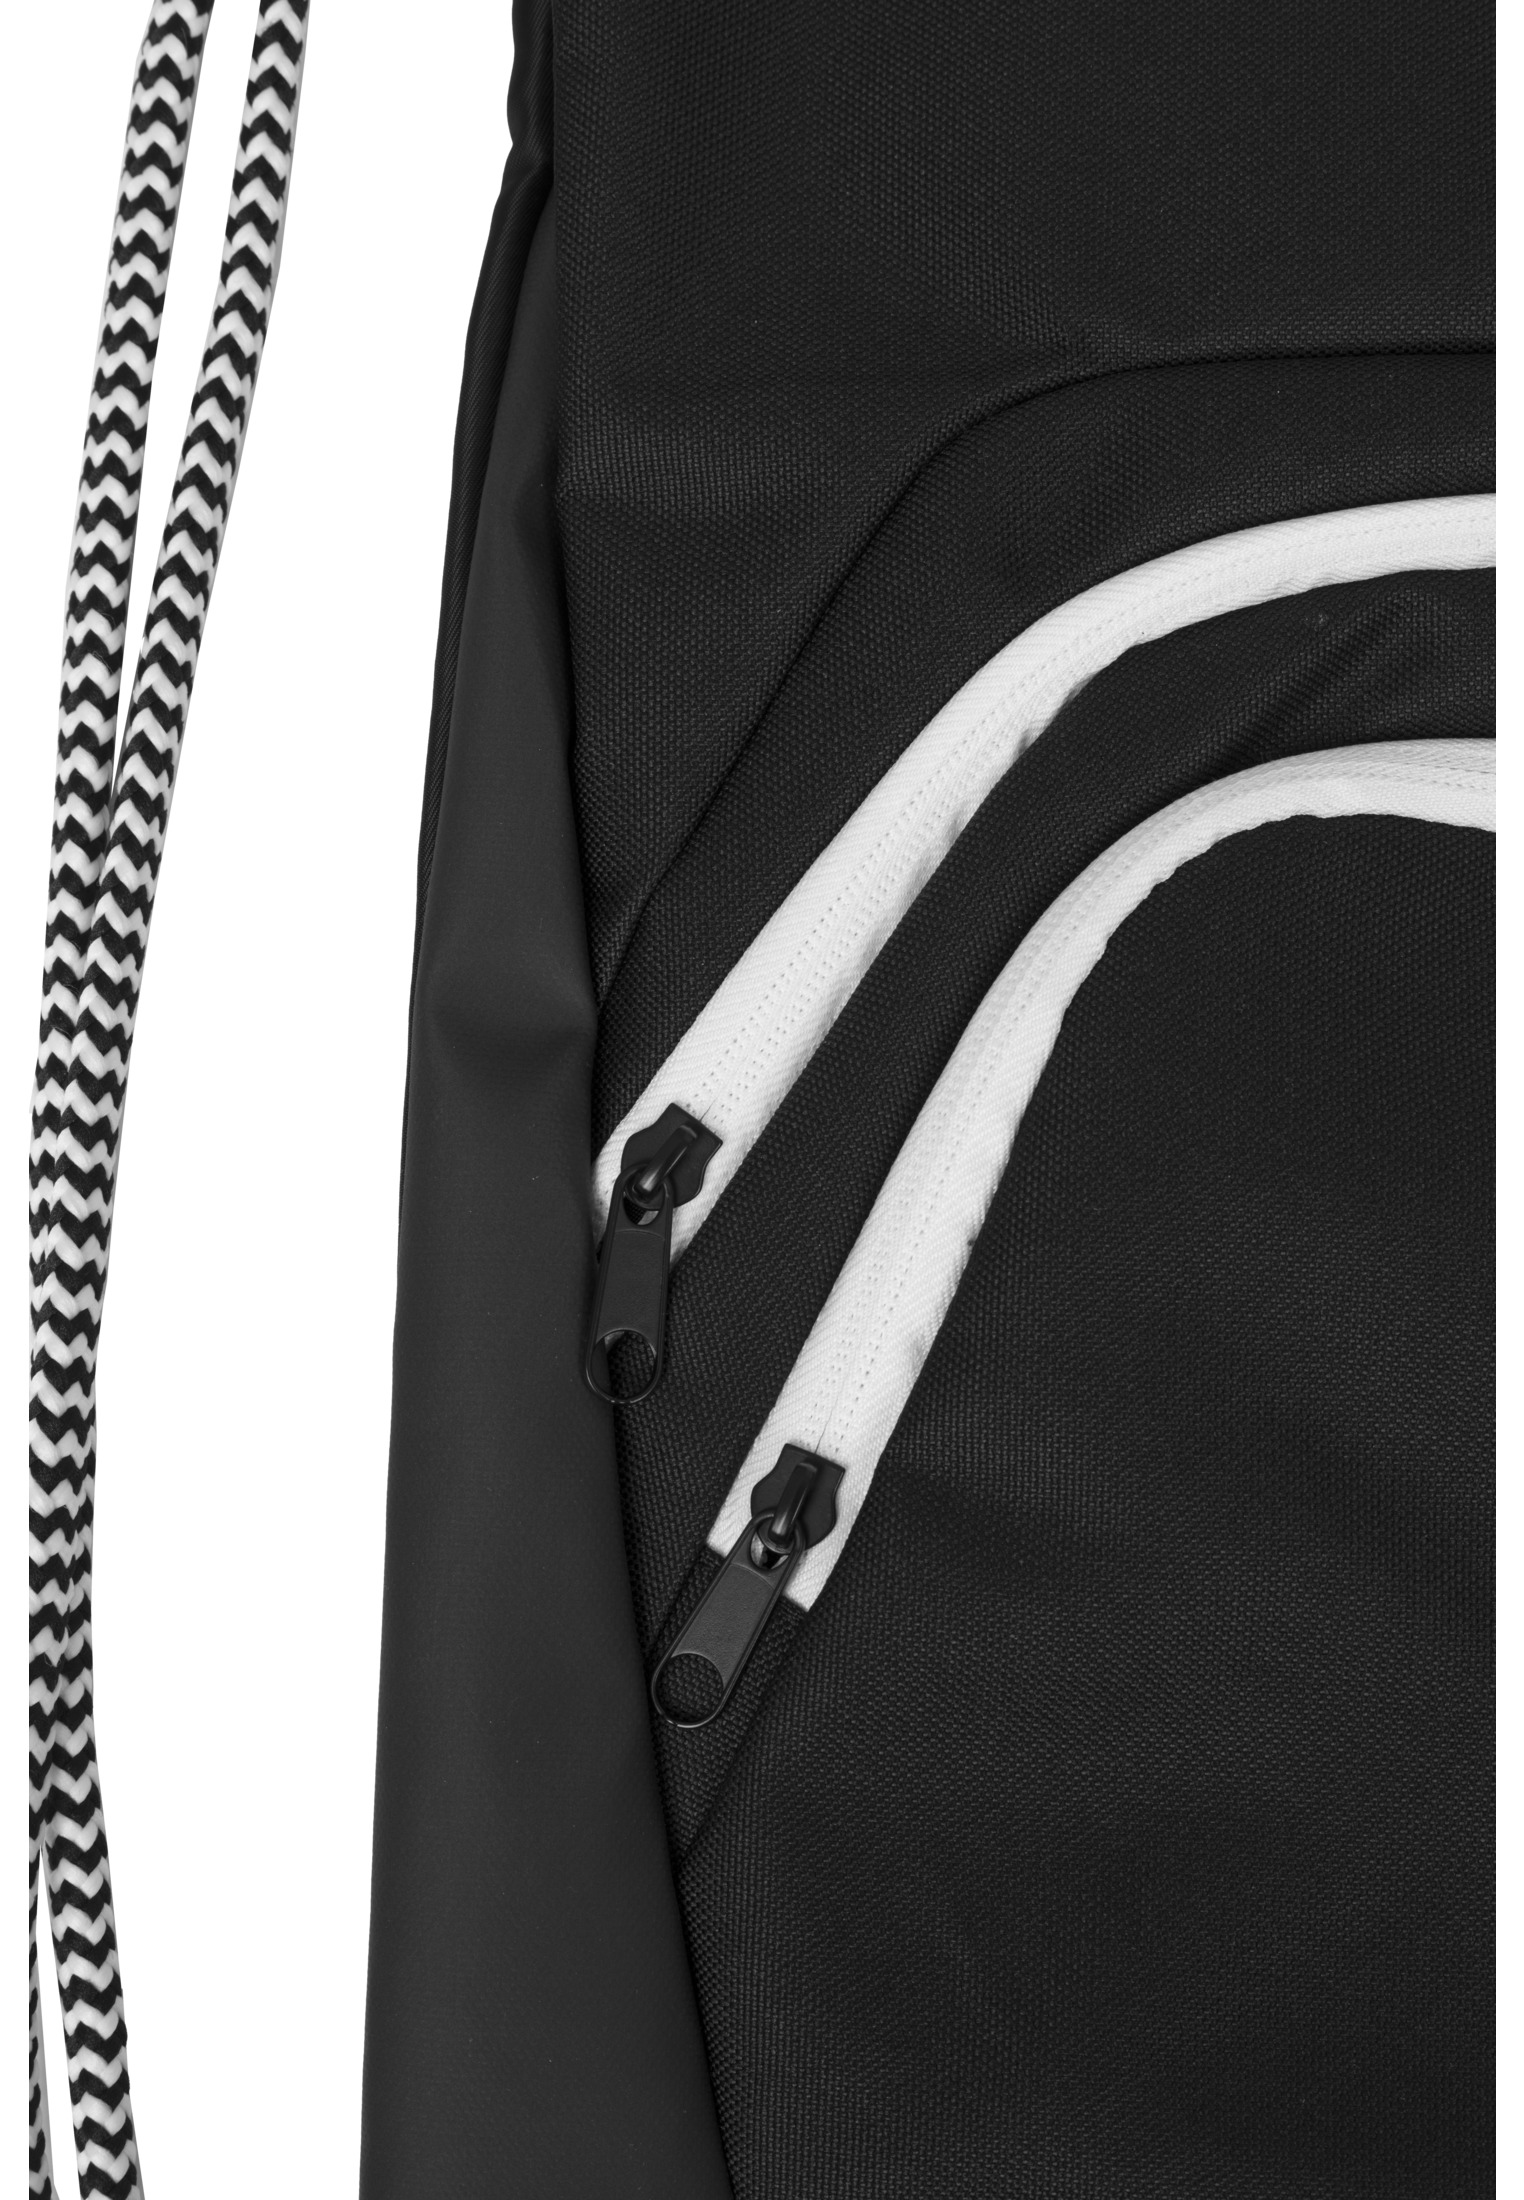 Taschen Ball Gym Bag in Farbe black/black/white